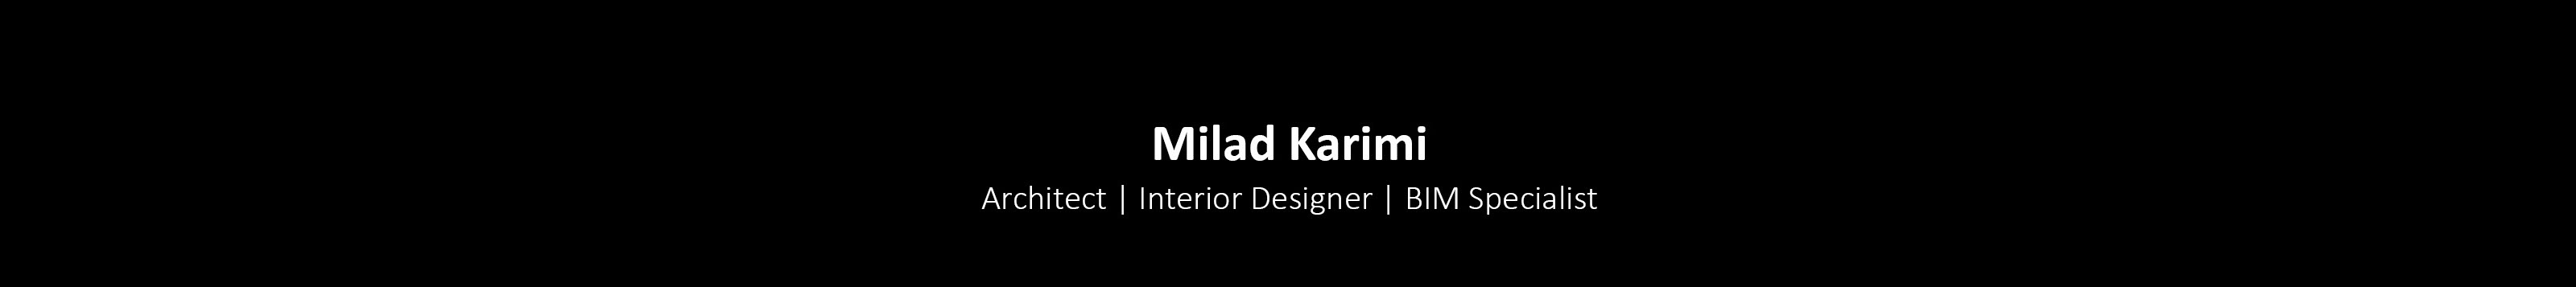 Milad Karimi profil başlığı